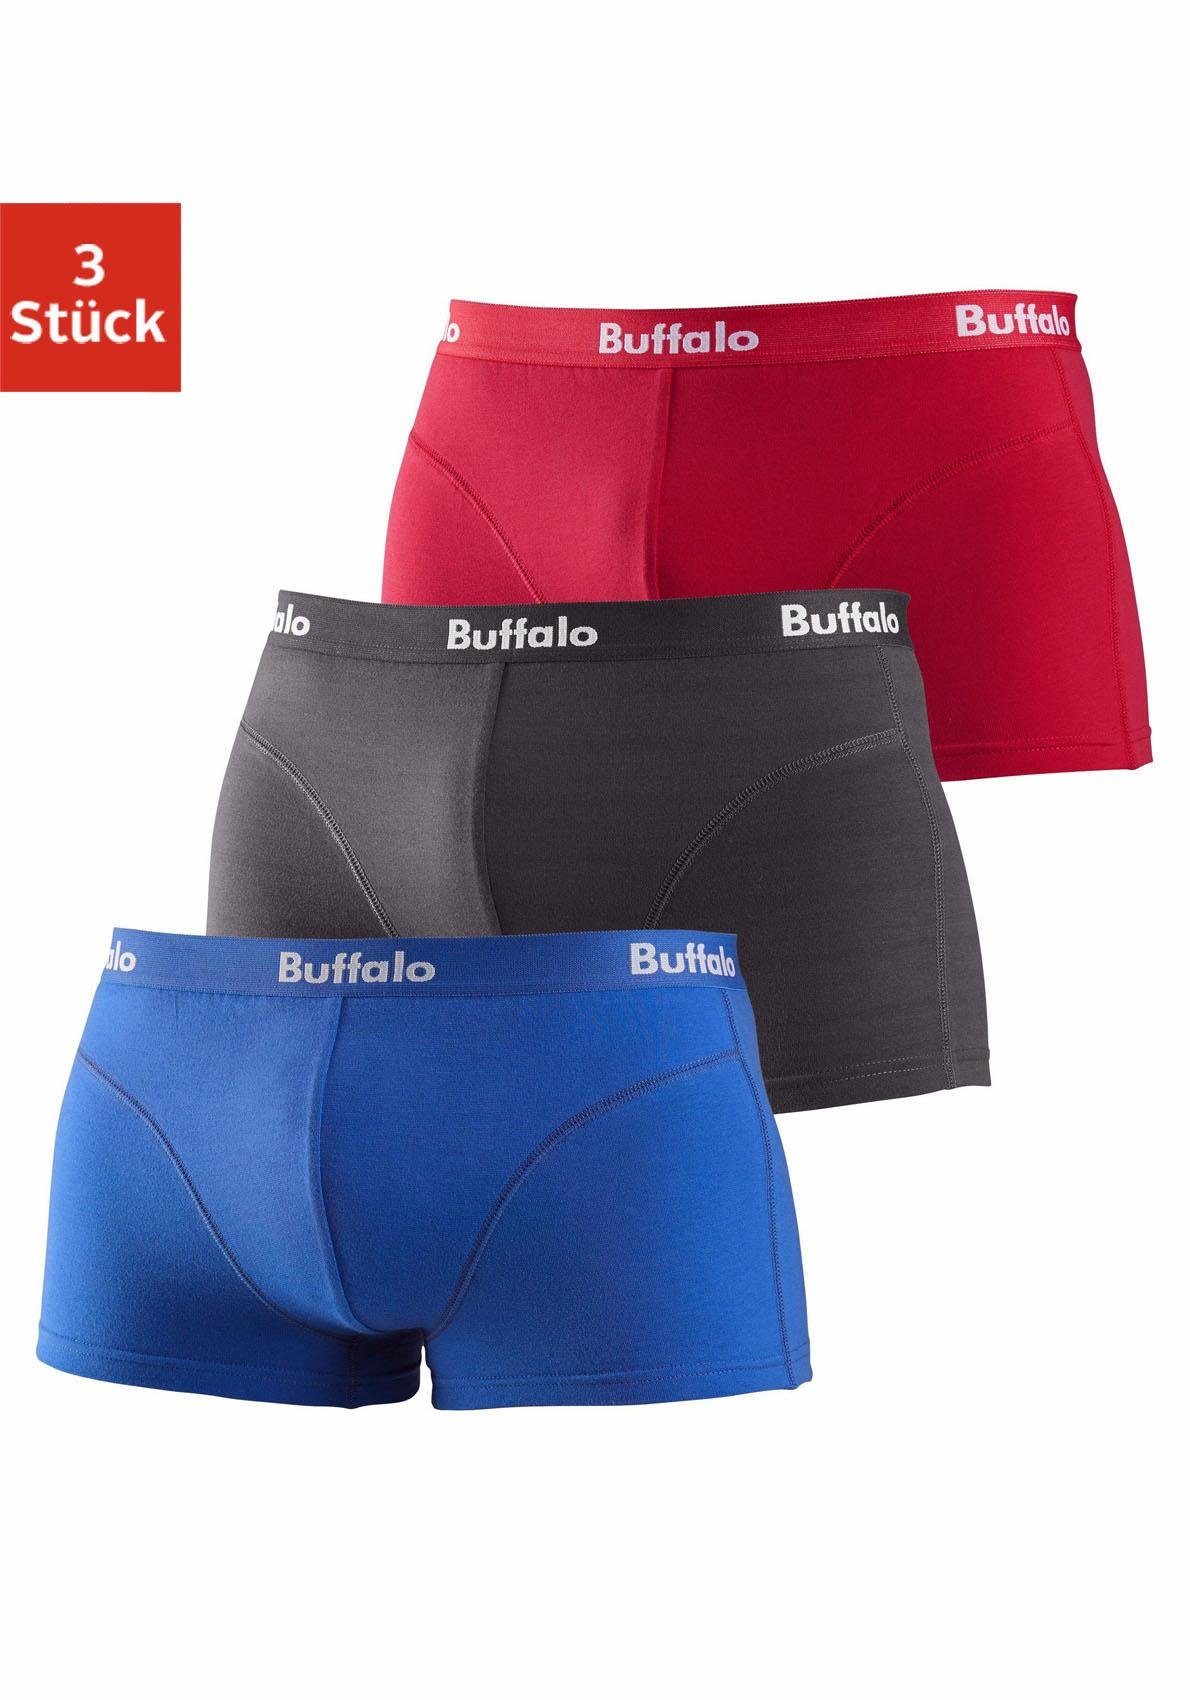 mit 3-St) vorn Buffalo (Packung, Hipster rot, royalblau, Overlock-Nähten anthrazit